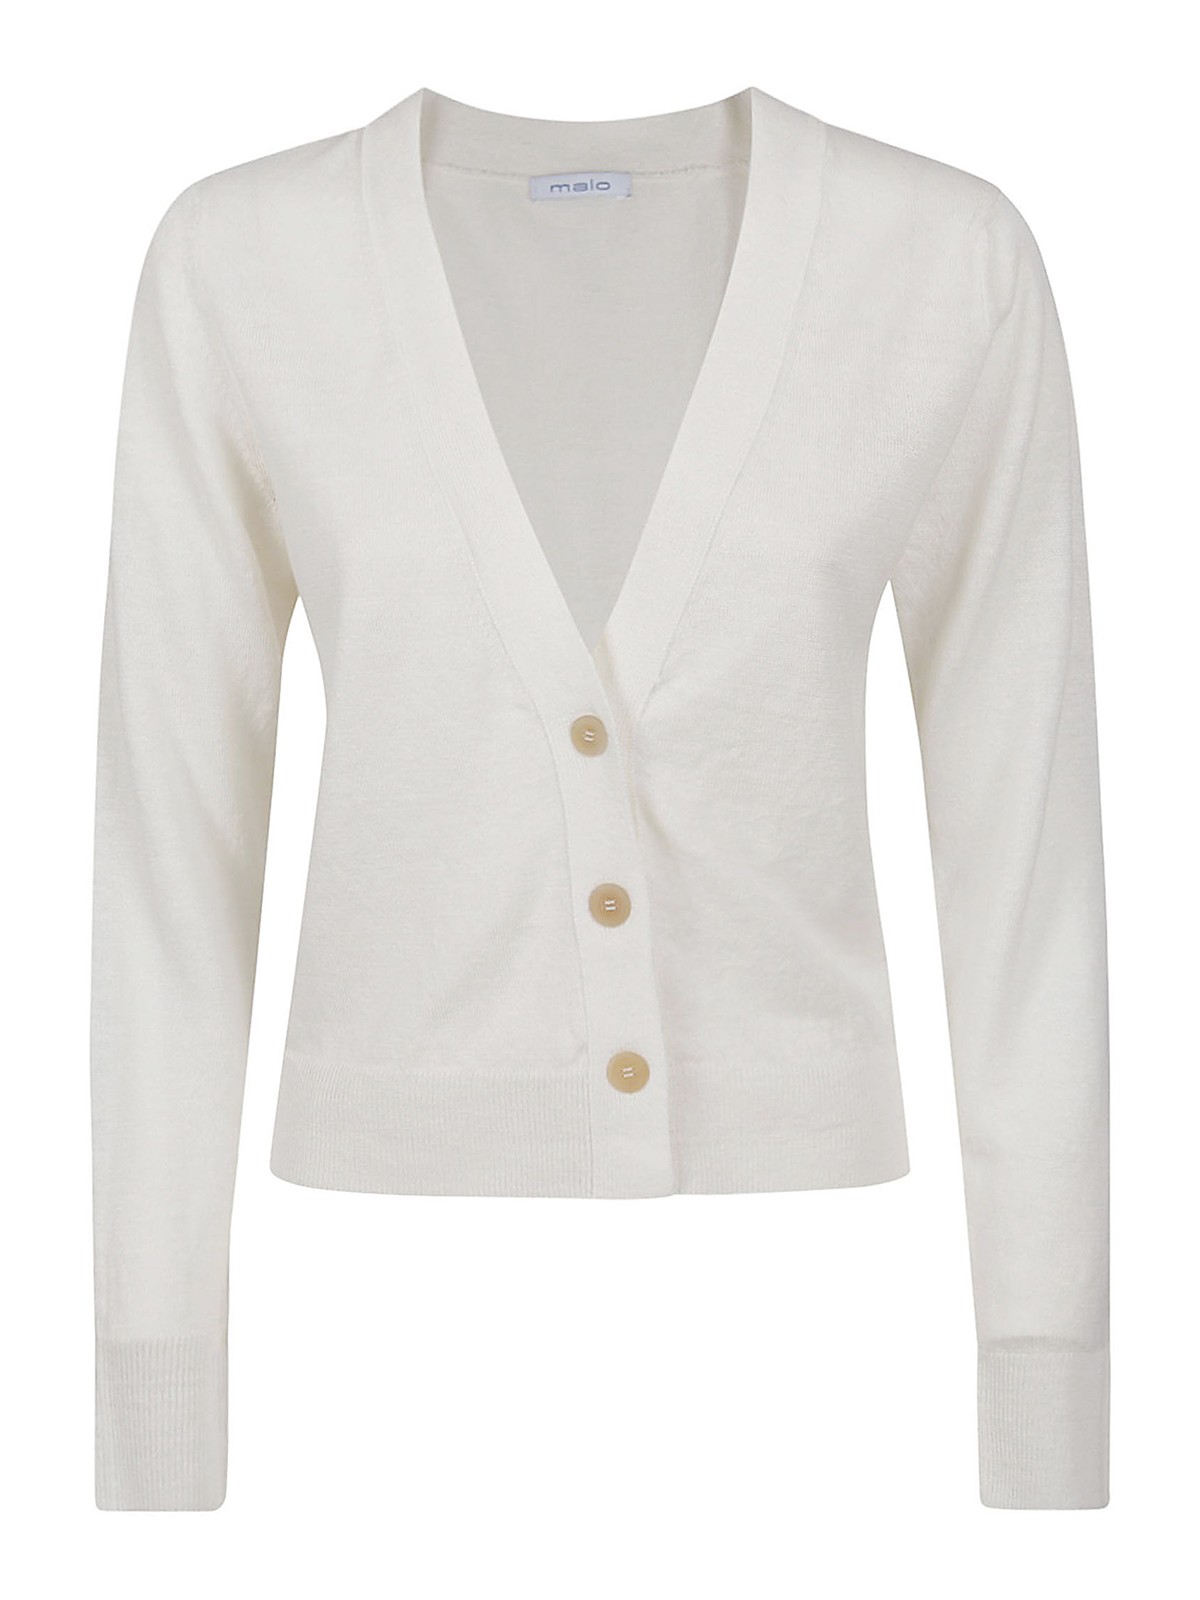 Malo Short Three-button Cardigan In White